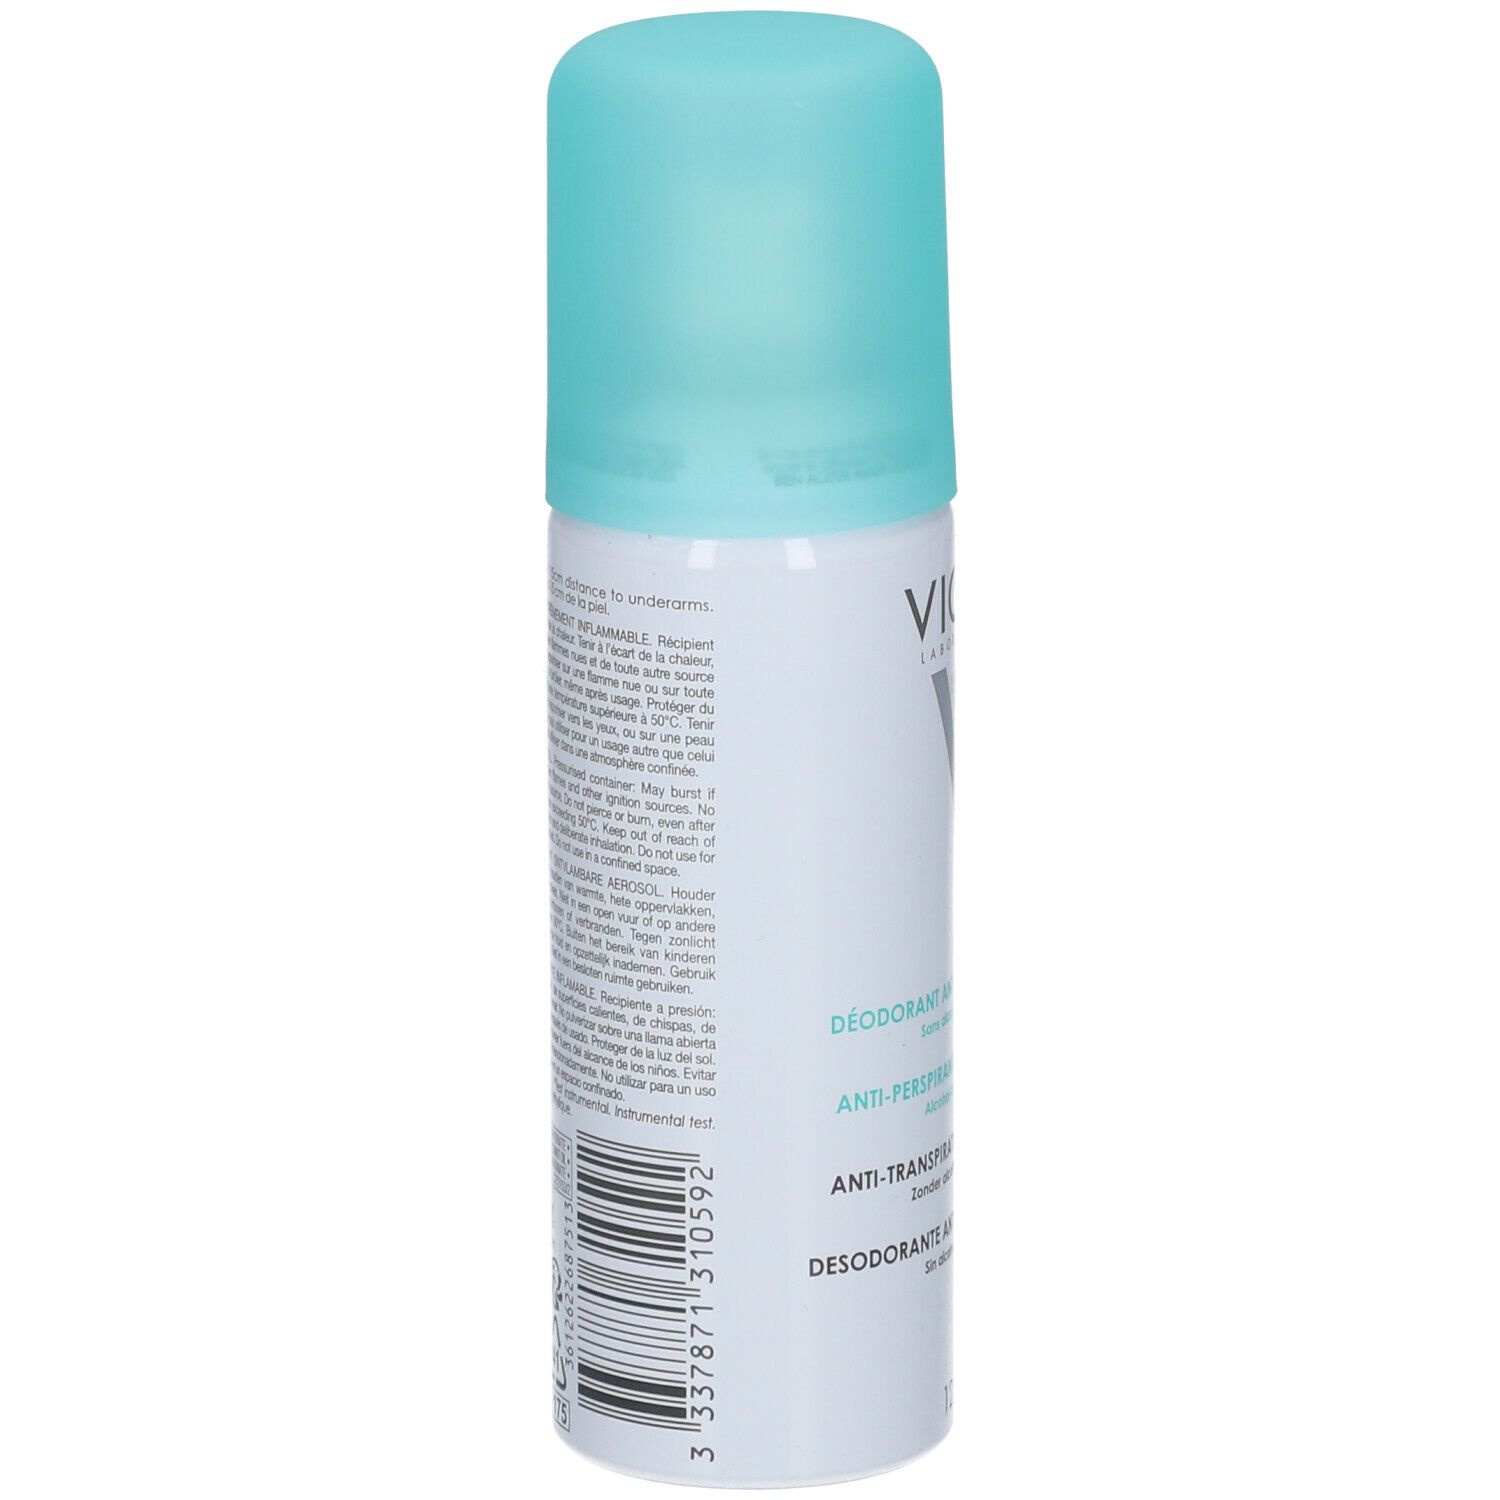 VICHY Déodorant Anti-Transpirant 48H  - Aérosol